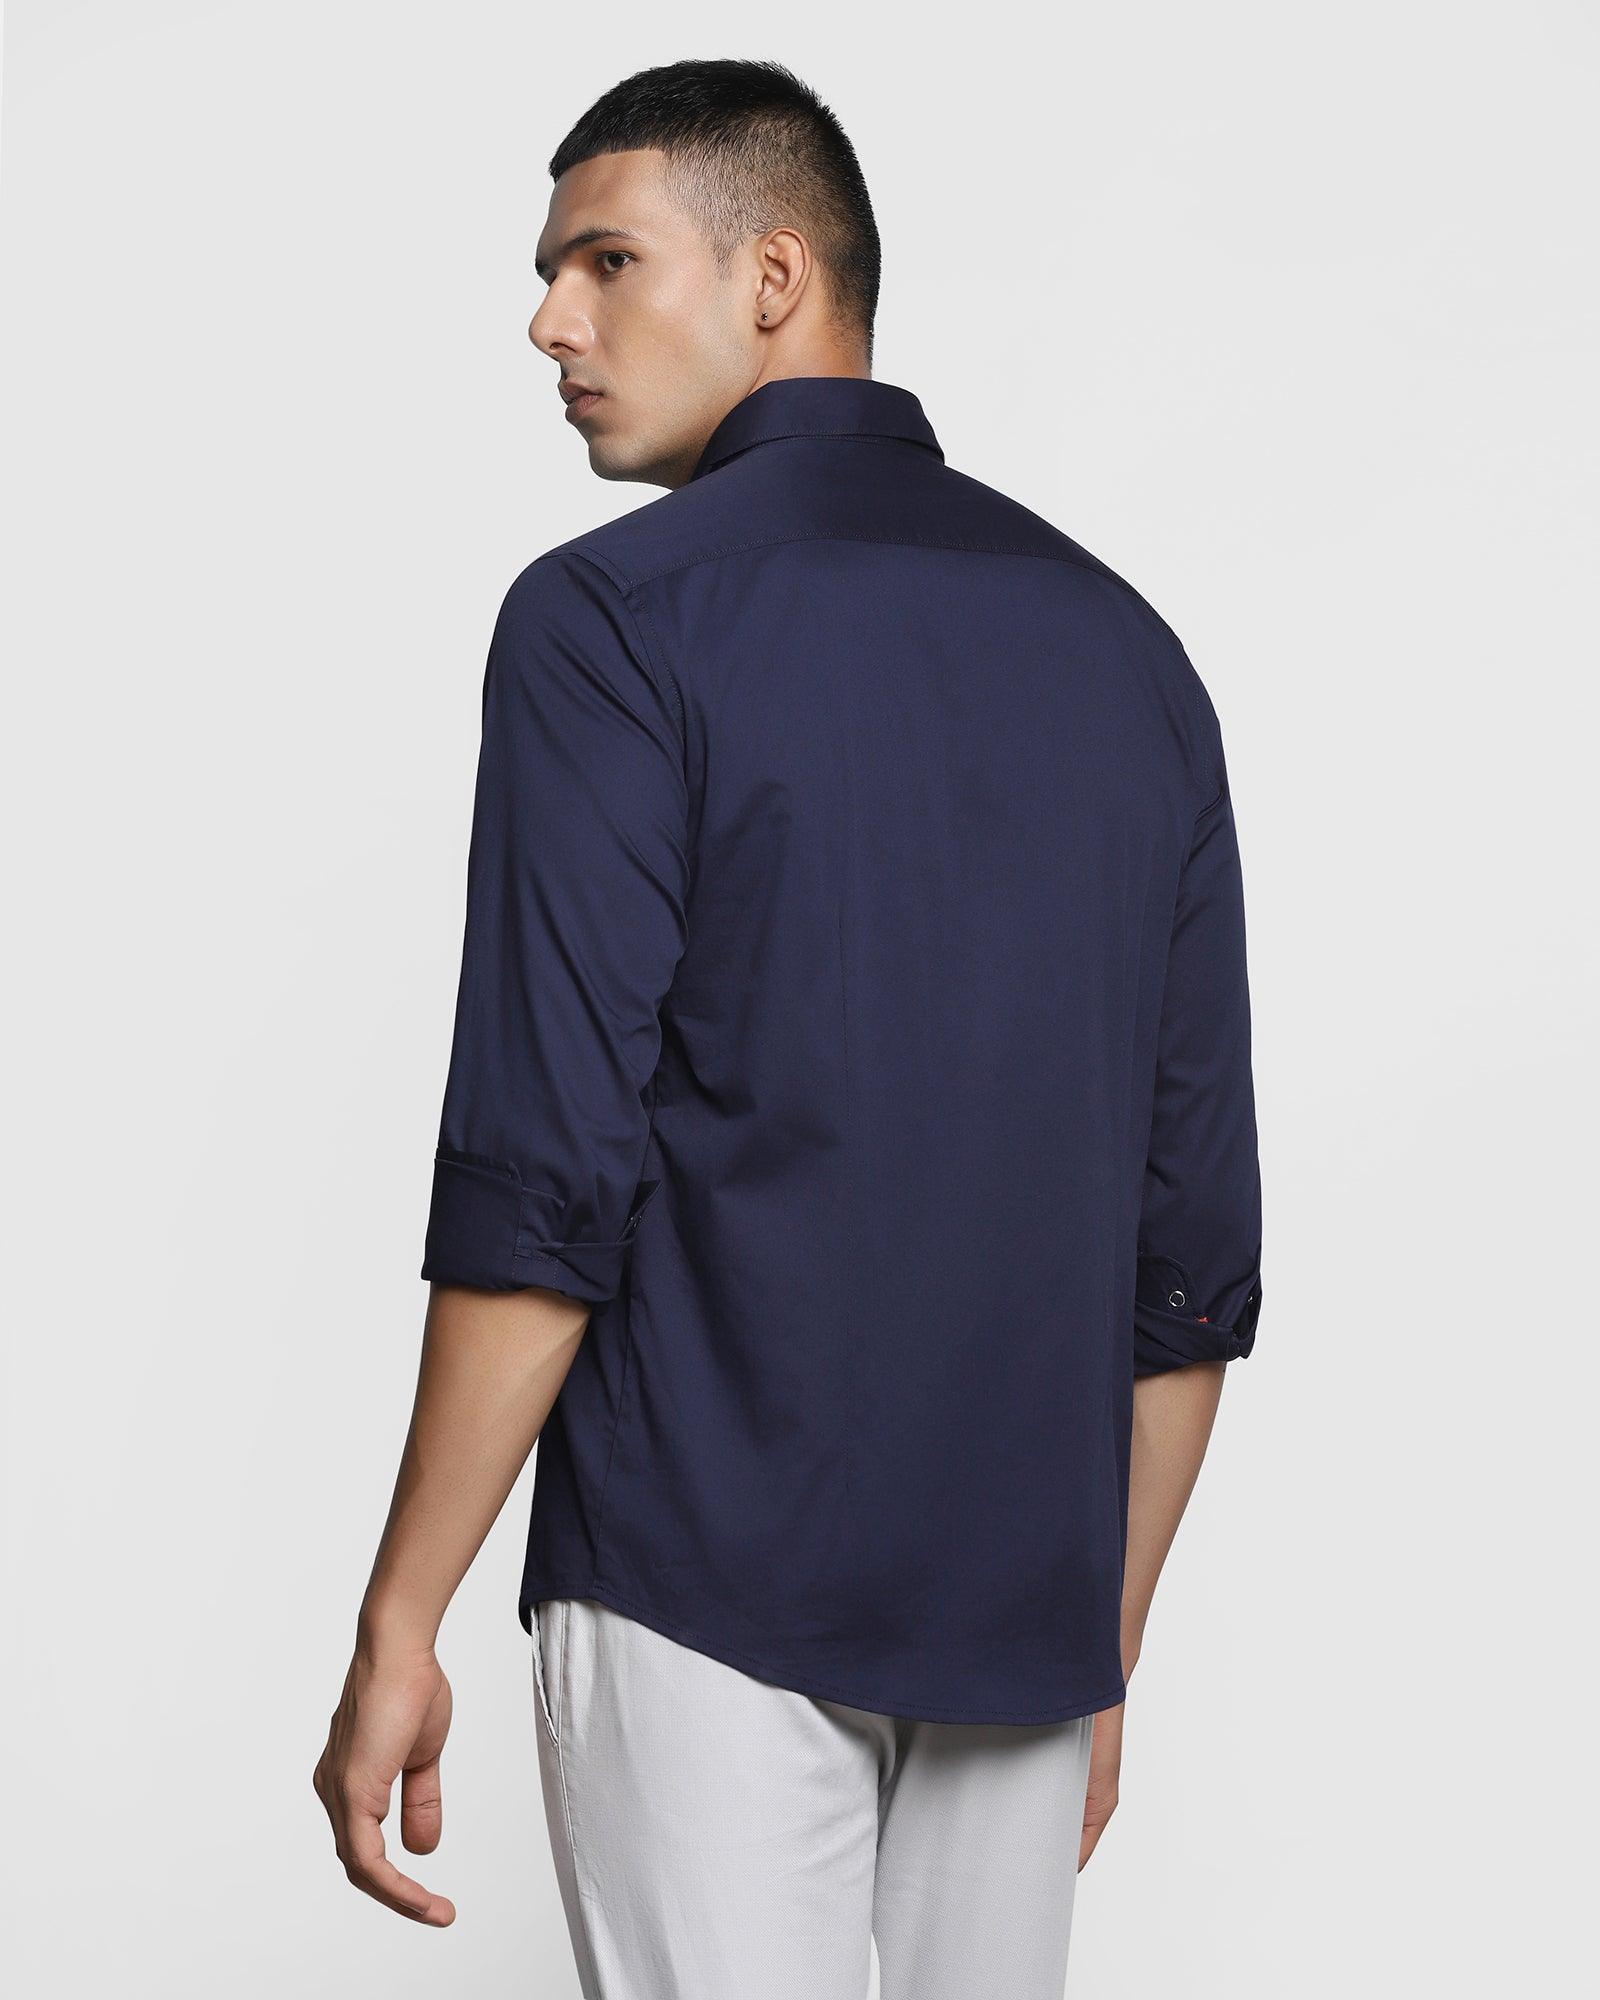 Casual Navy Solid Shirt - Beckham